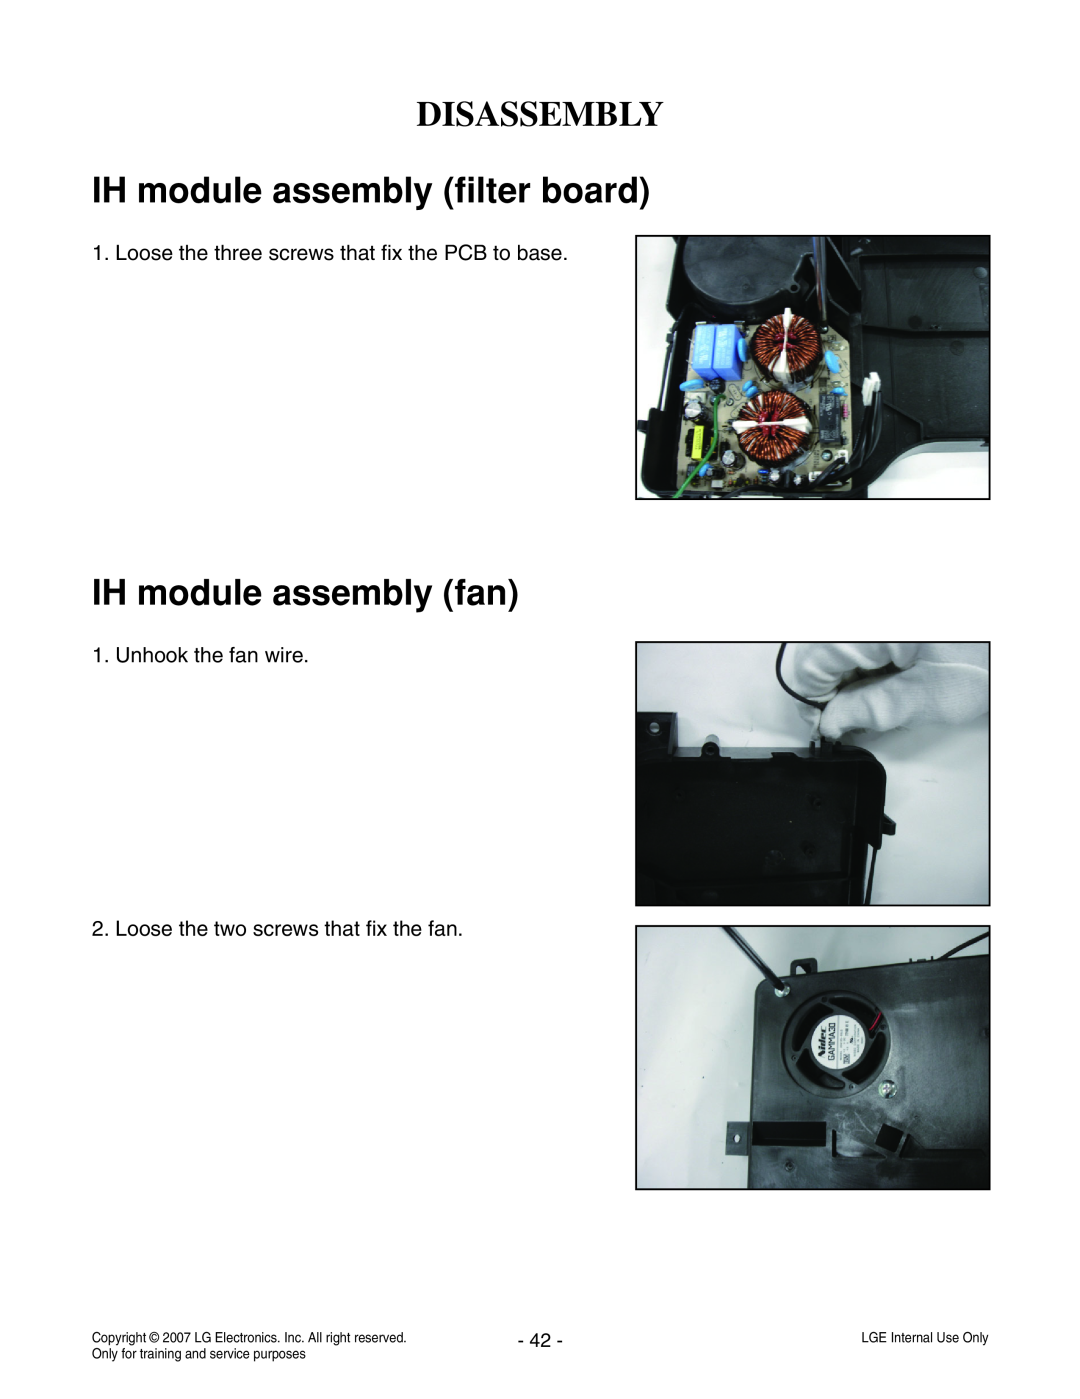 LG Electronics LCE30845 service manual IH module assembly filter board, IH module assembly fan, Disassembly 